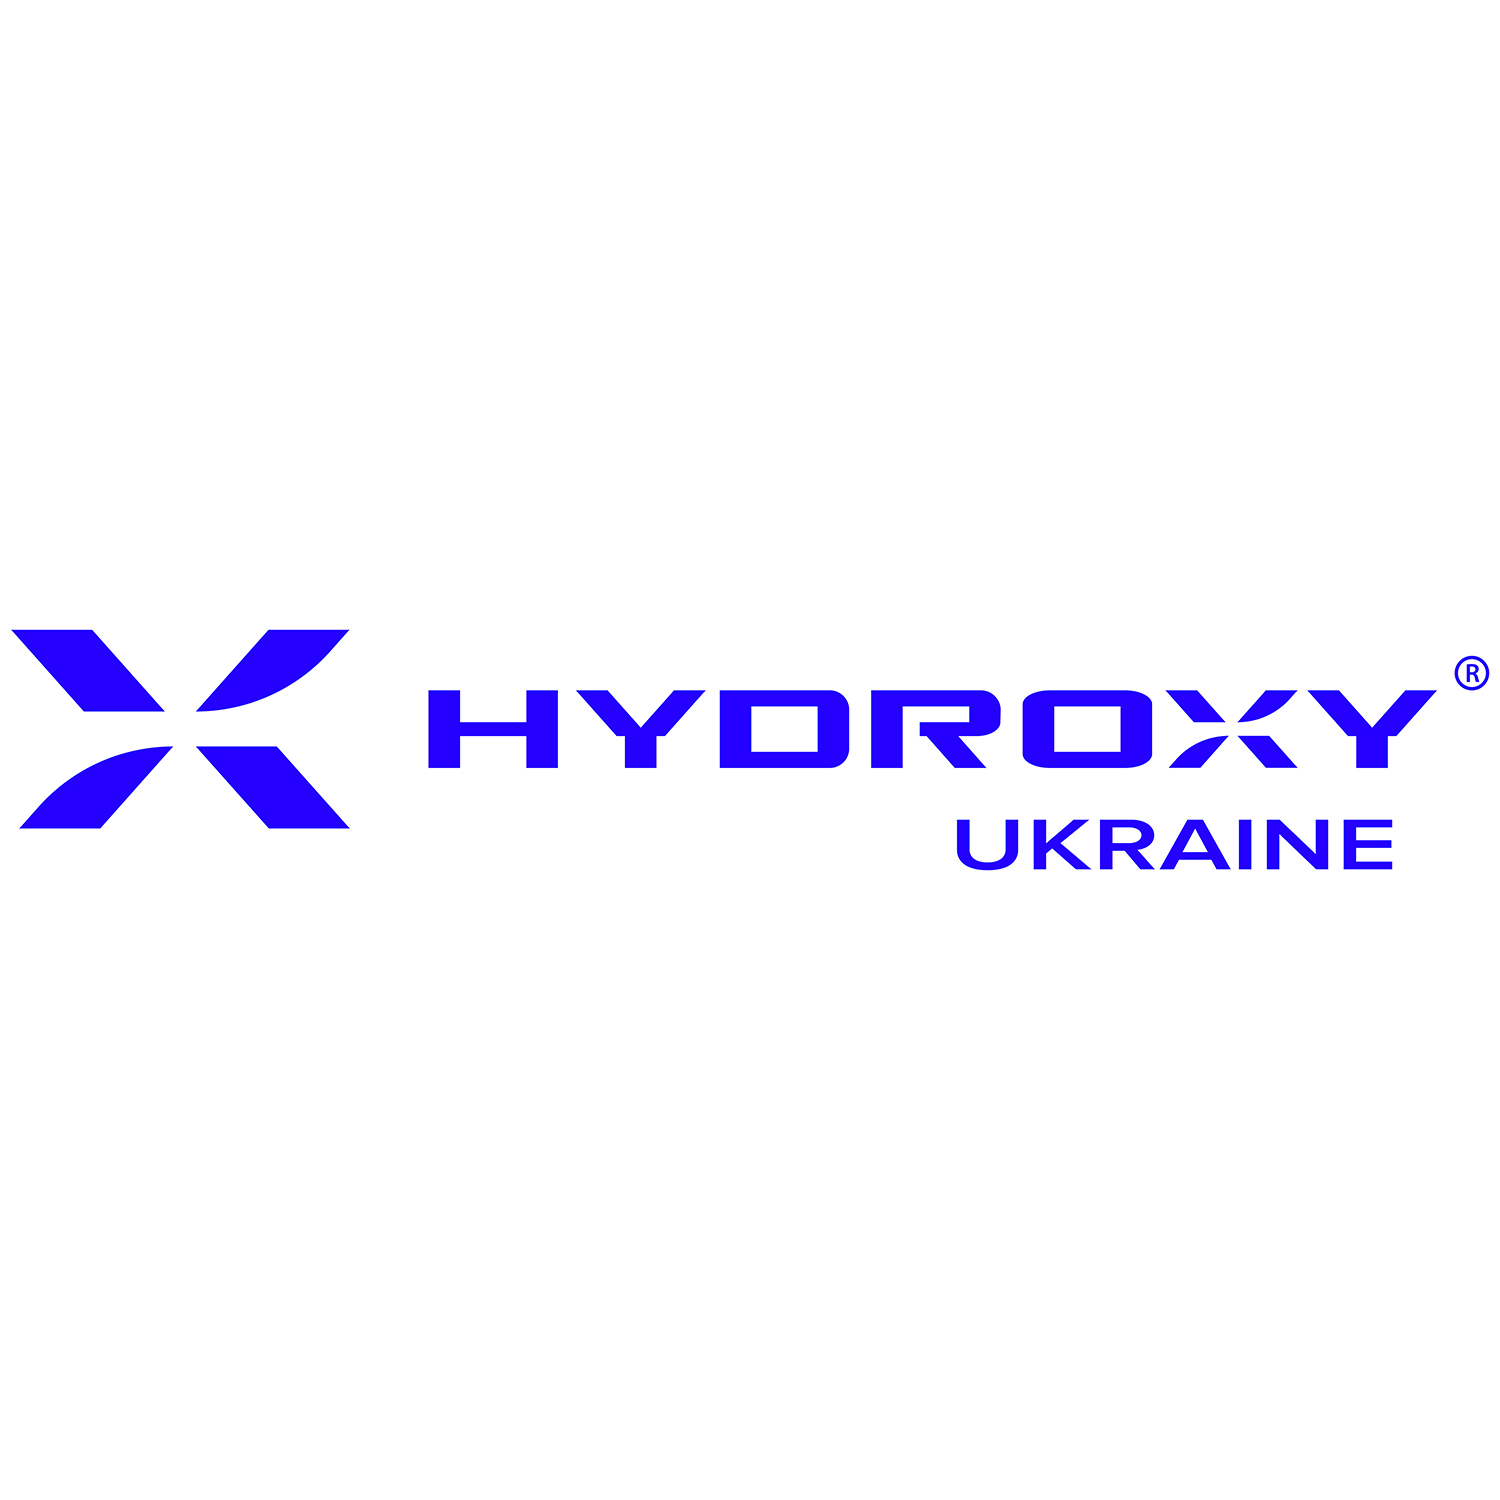 XYDROXY UKRAINE